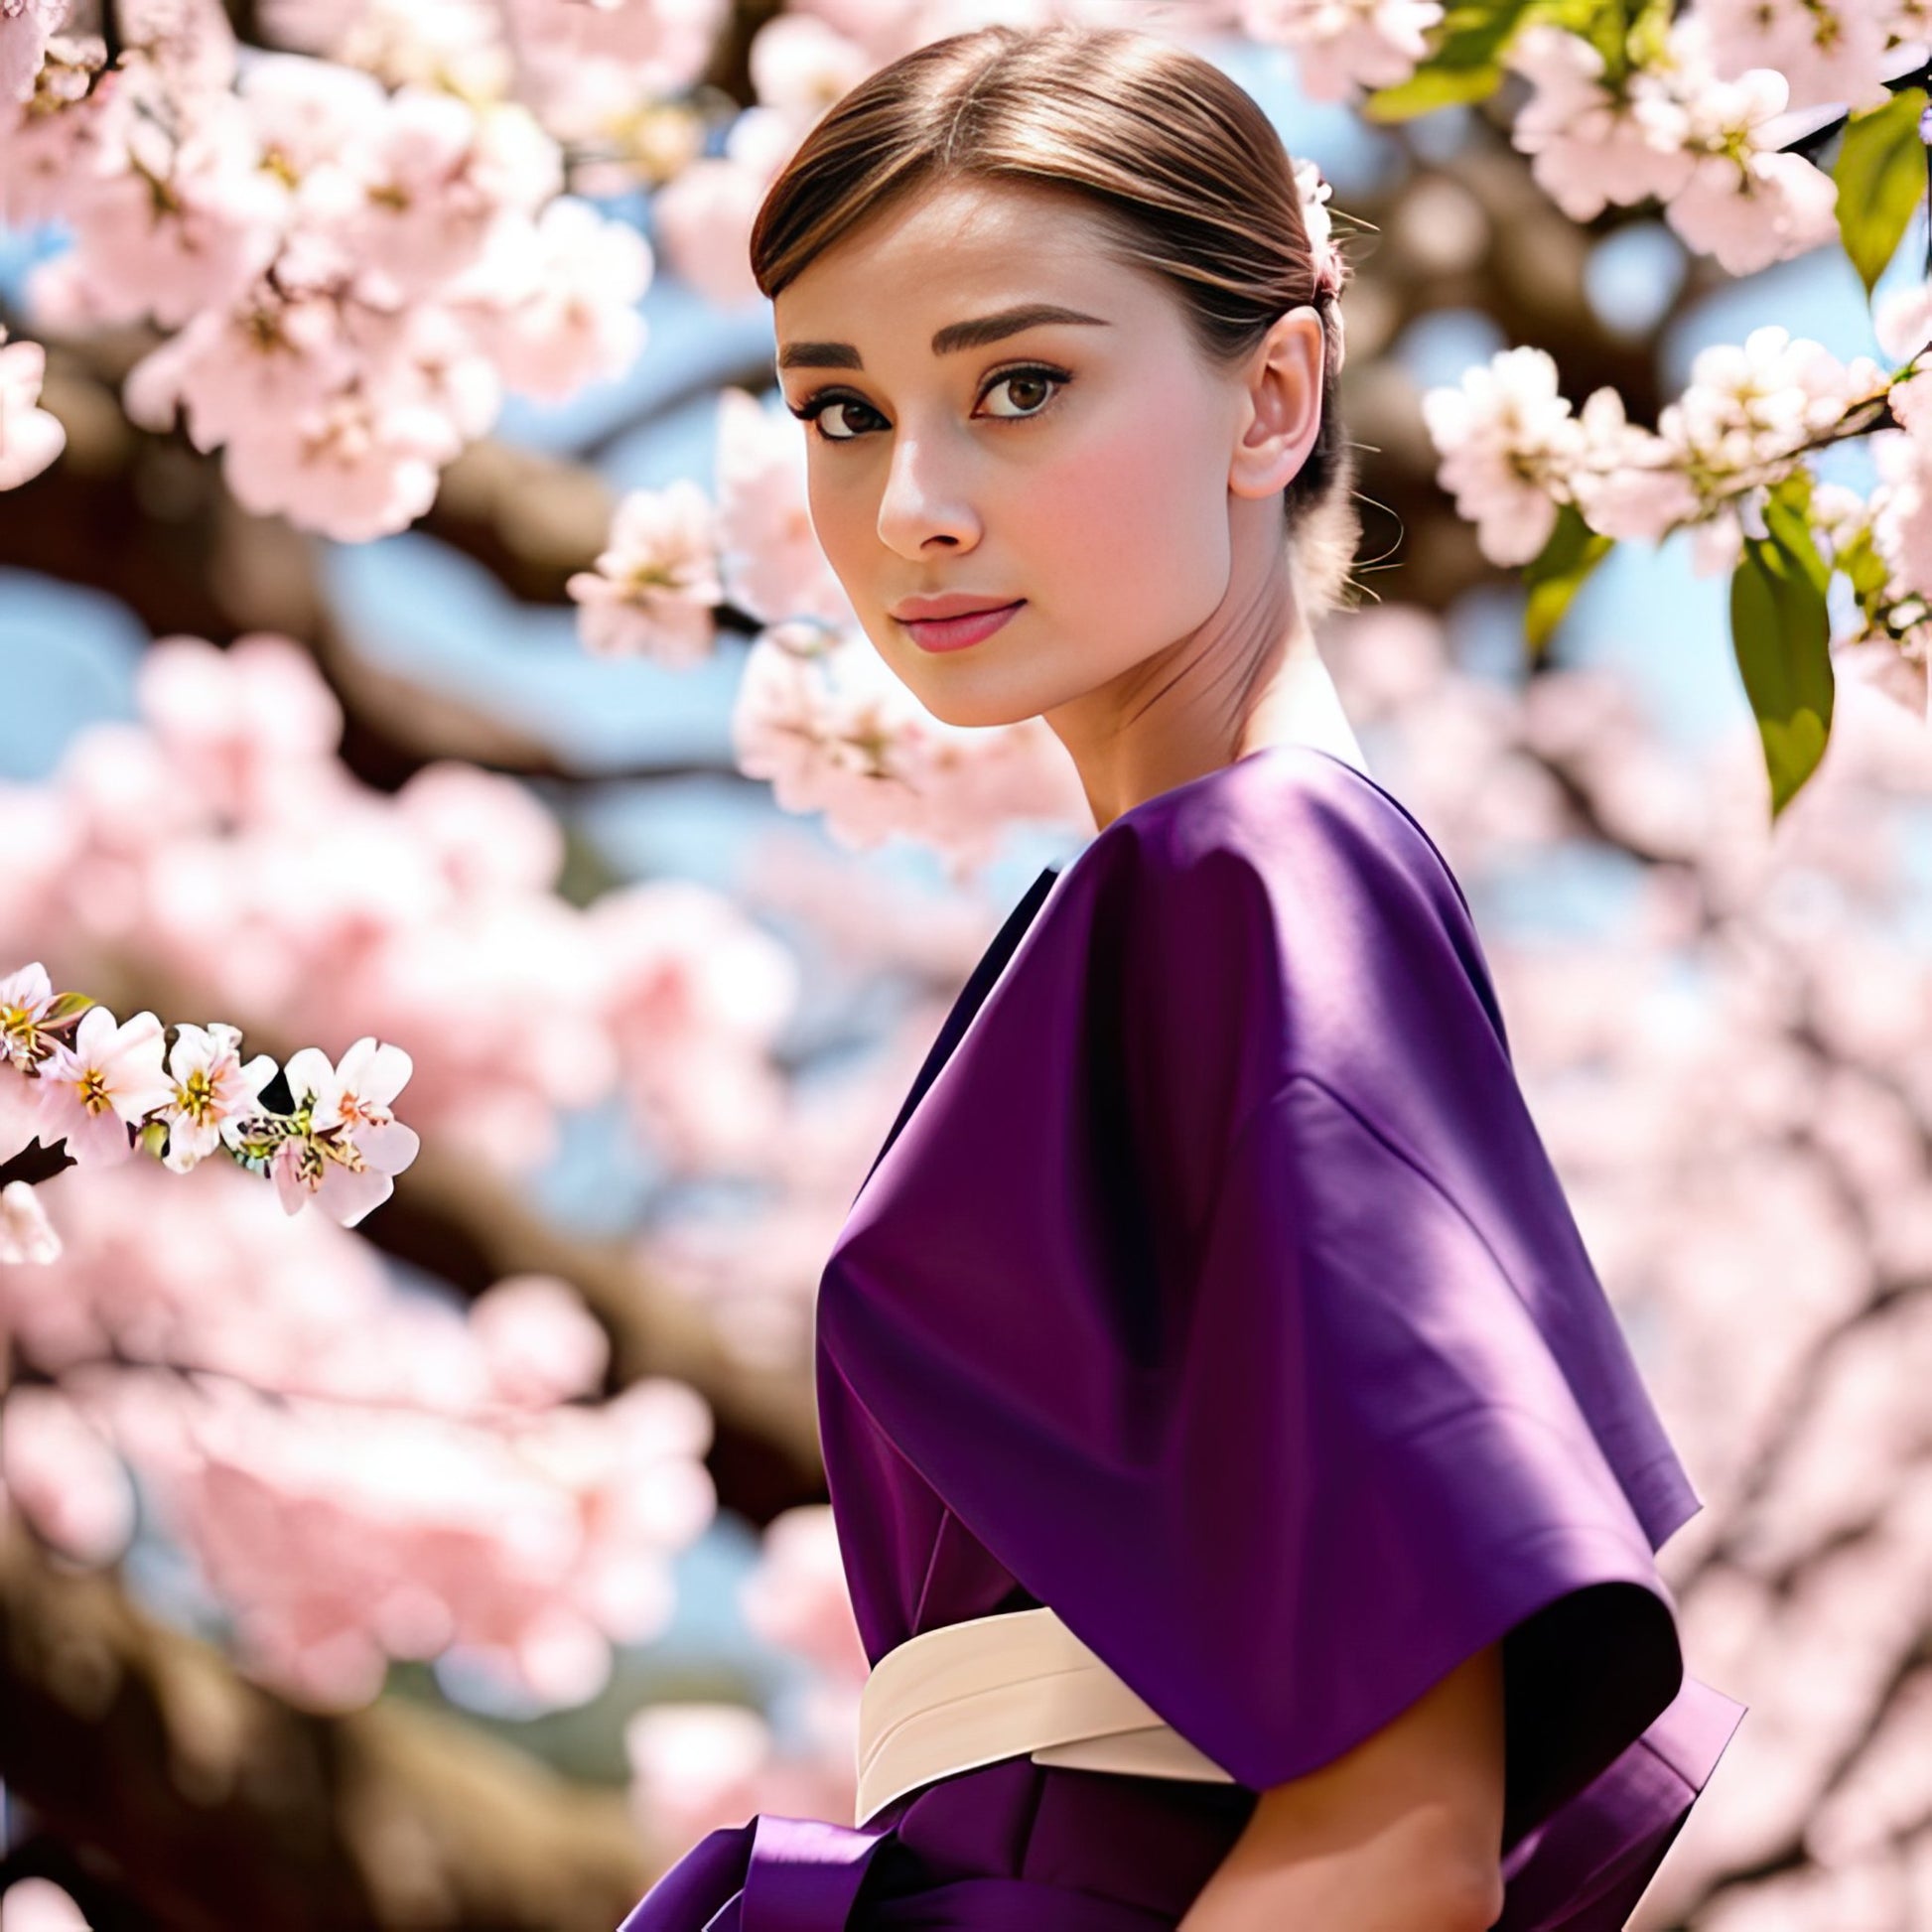 Digital Print: Sakura Embrace: Audrey Hepburn in Post-Blossom Tranquility, Digital Audrey, Art Print, Gift, Japan, さくら, decor, Spring Gift